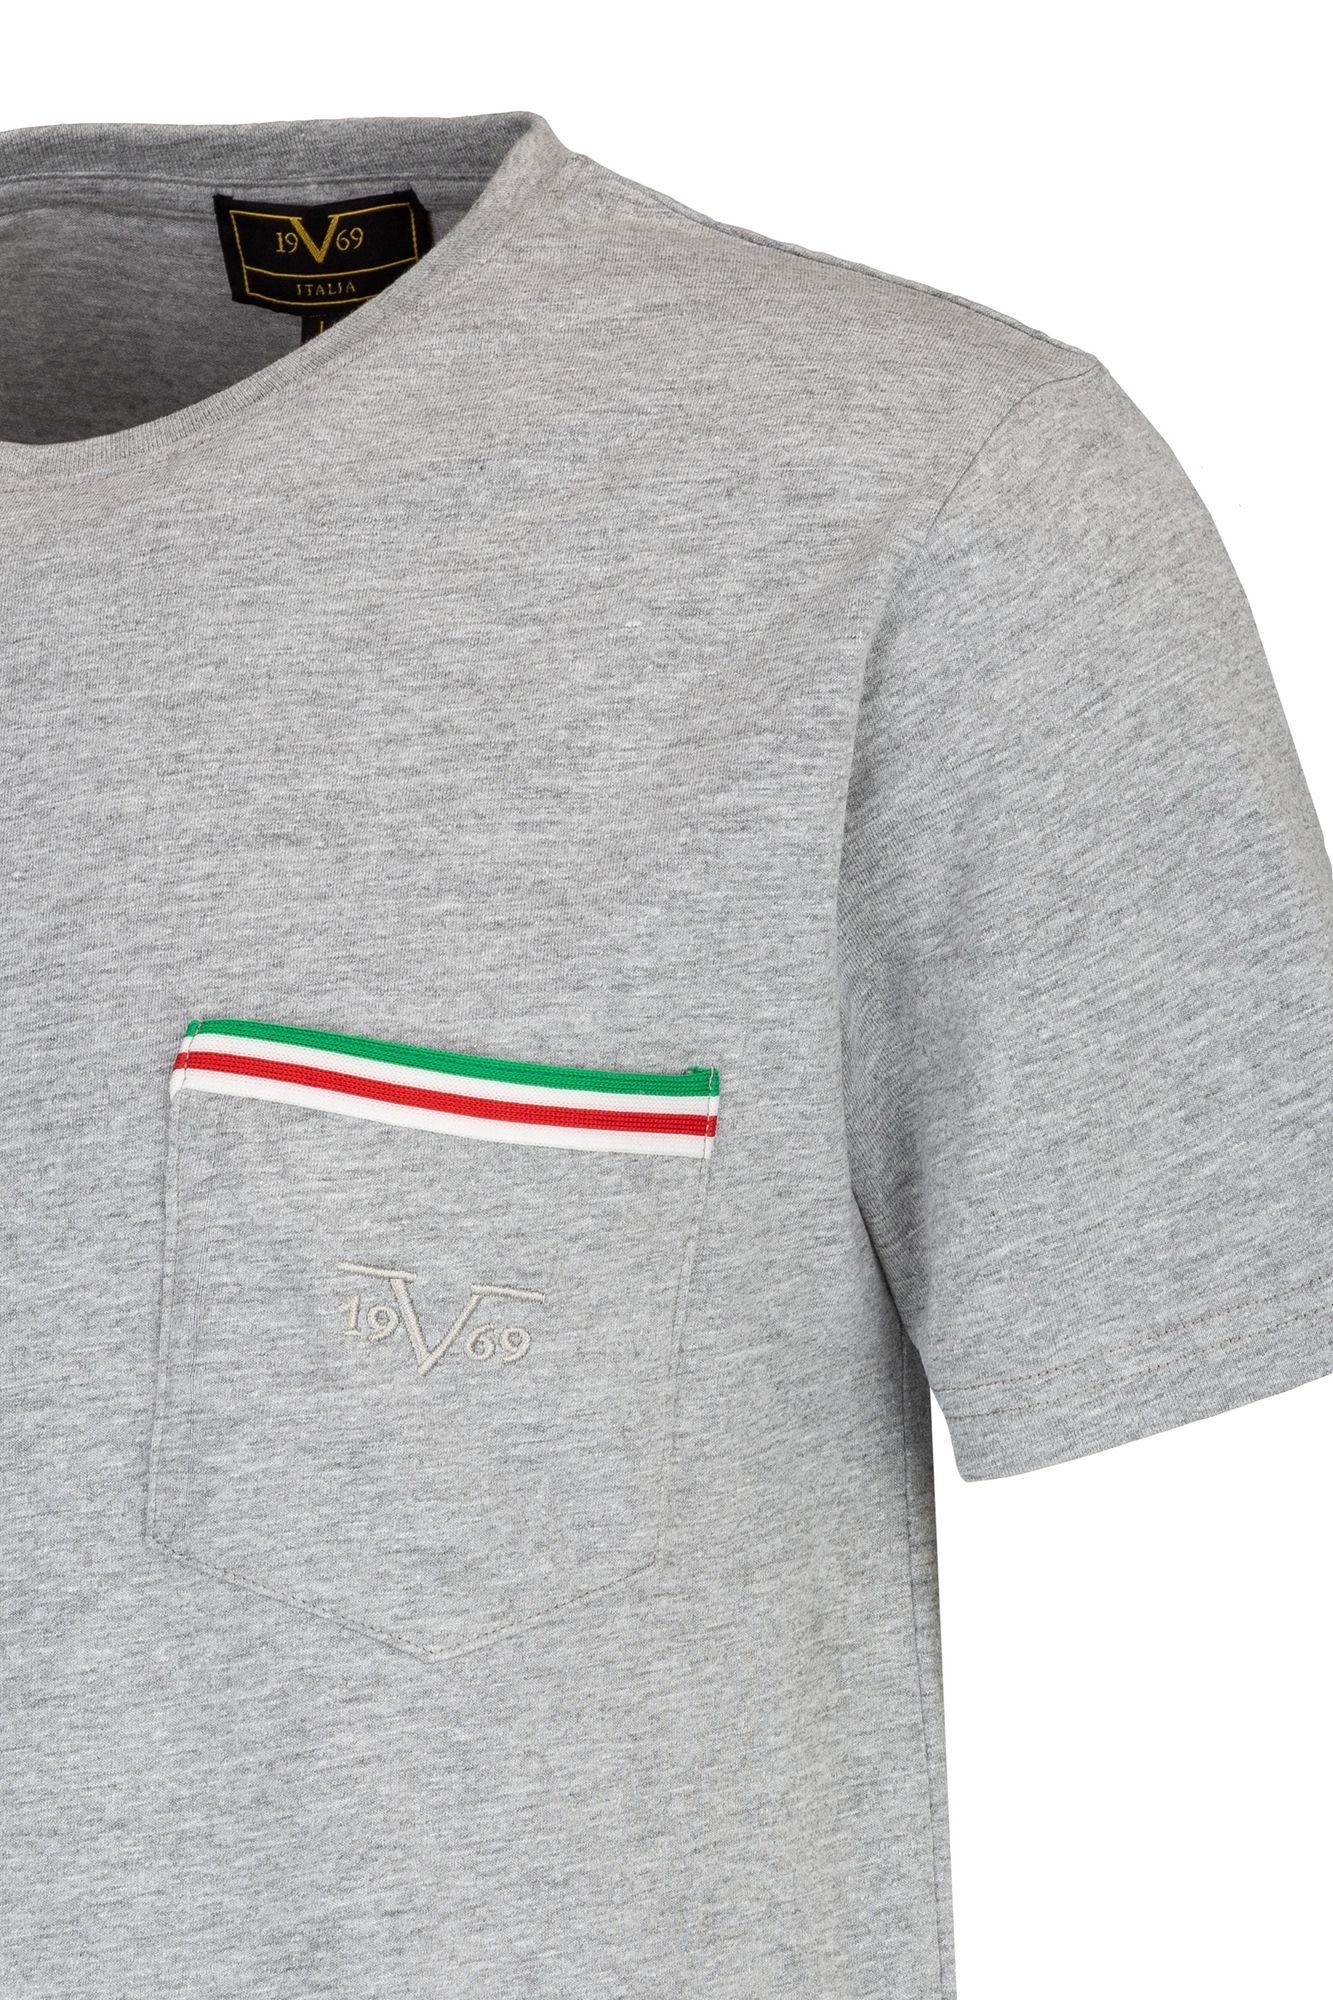 19V69 by Federico Versace T-Shirt Italia